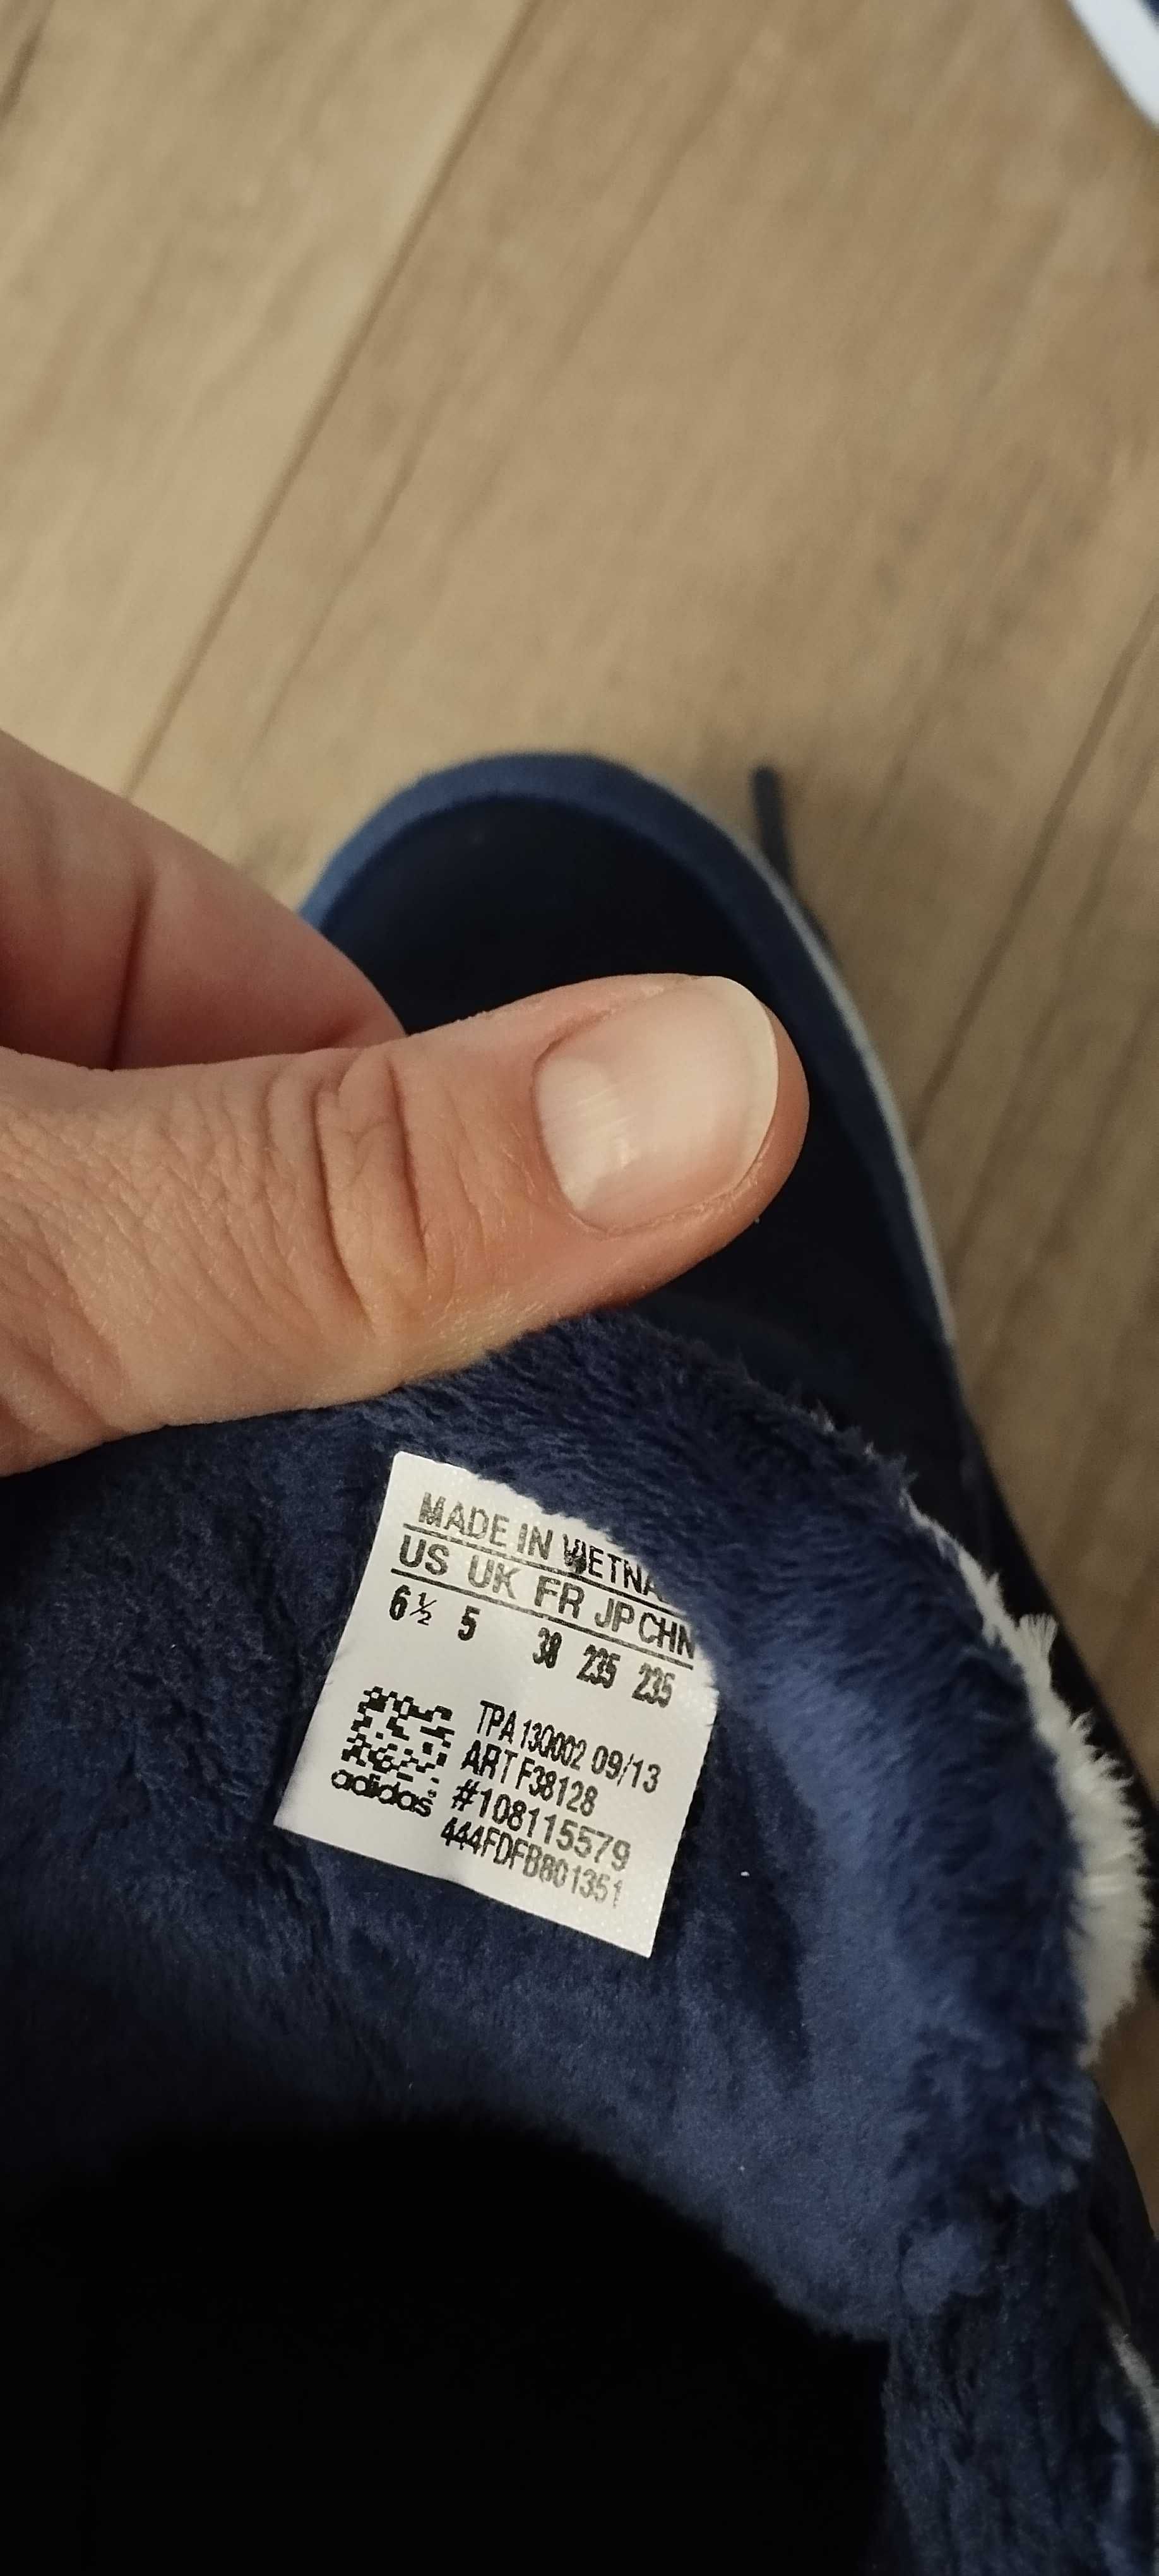 Buty Adidas neo label r.38